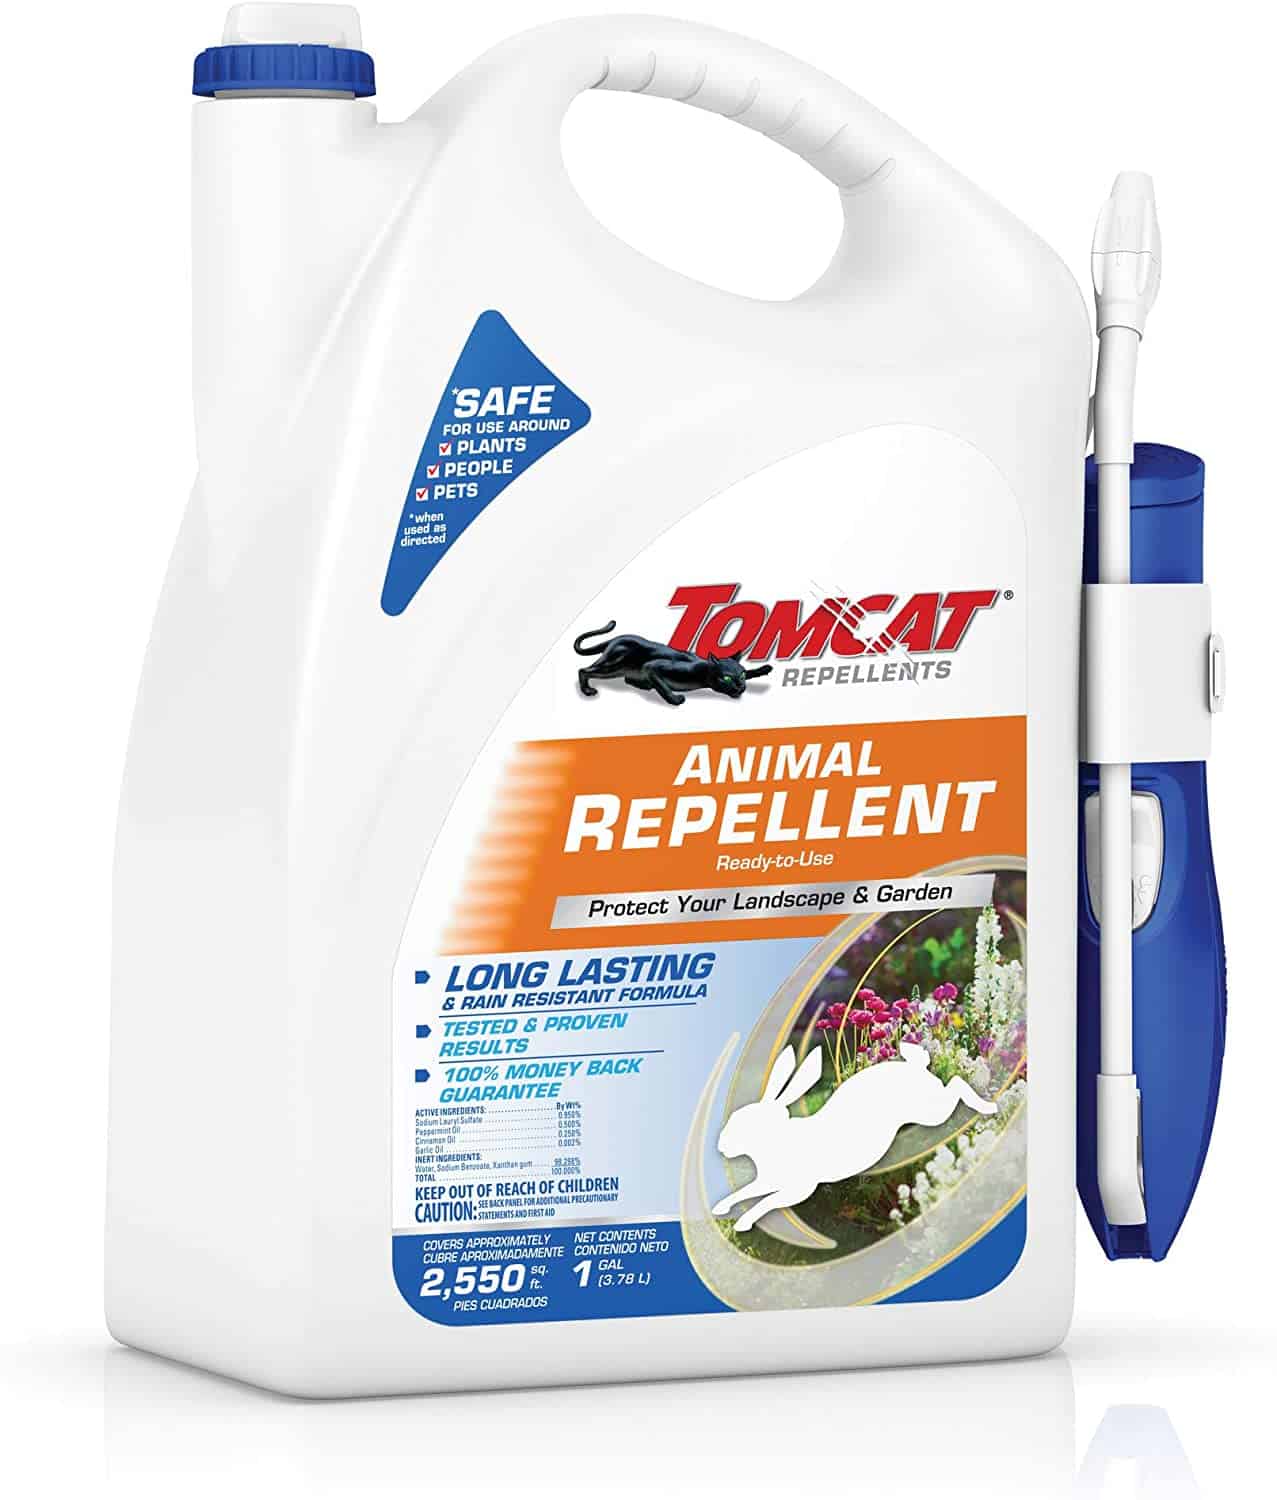 Tomcat animal repellent